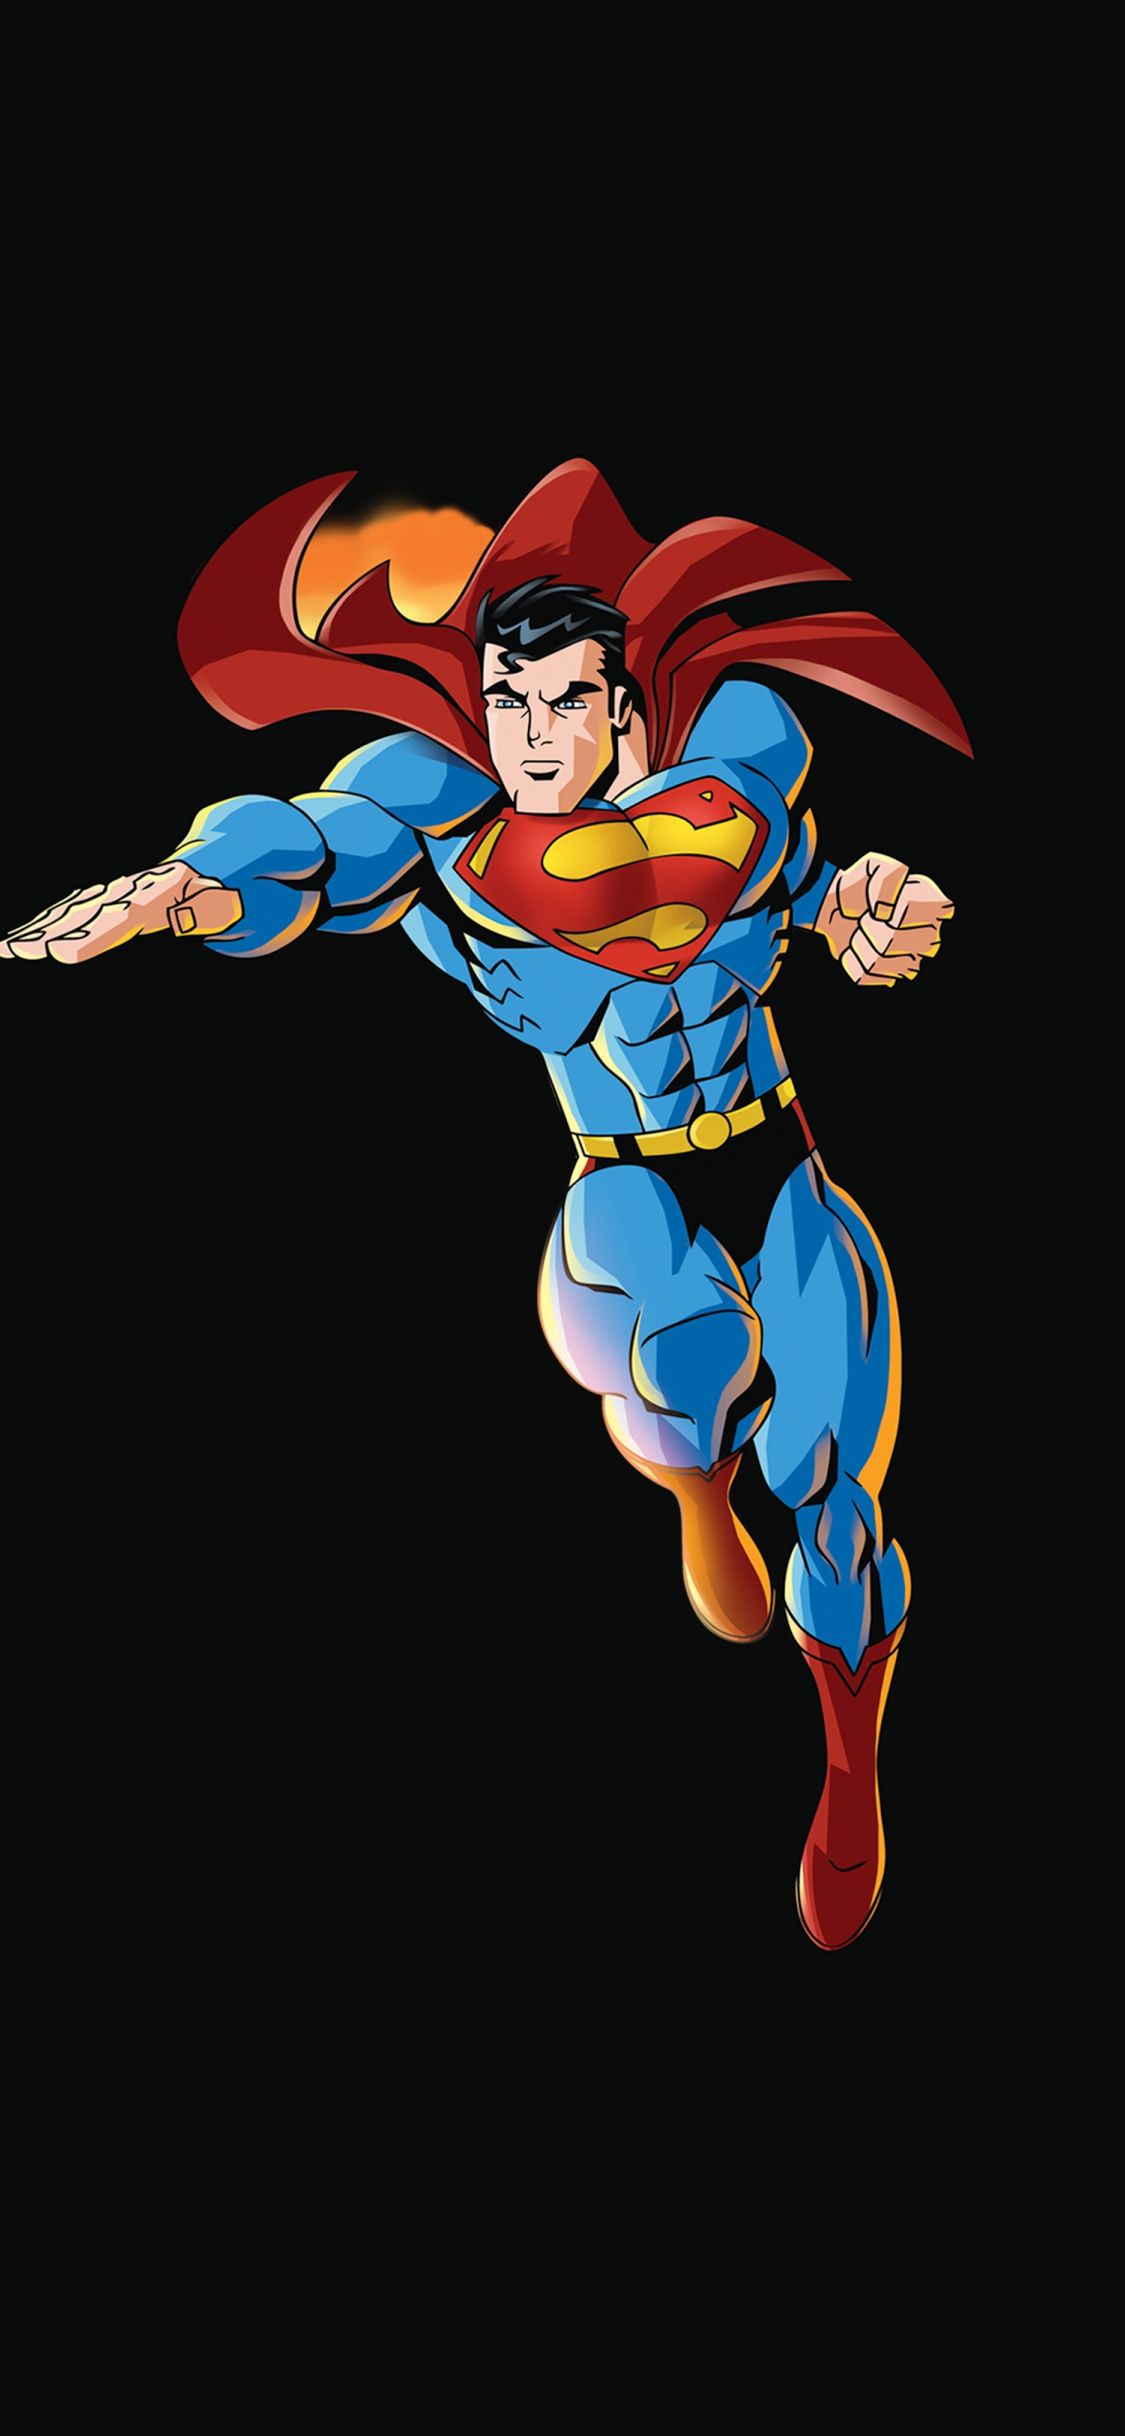 iPhone X Wallpaper 4k Superman